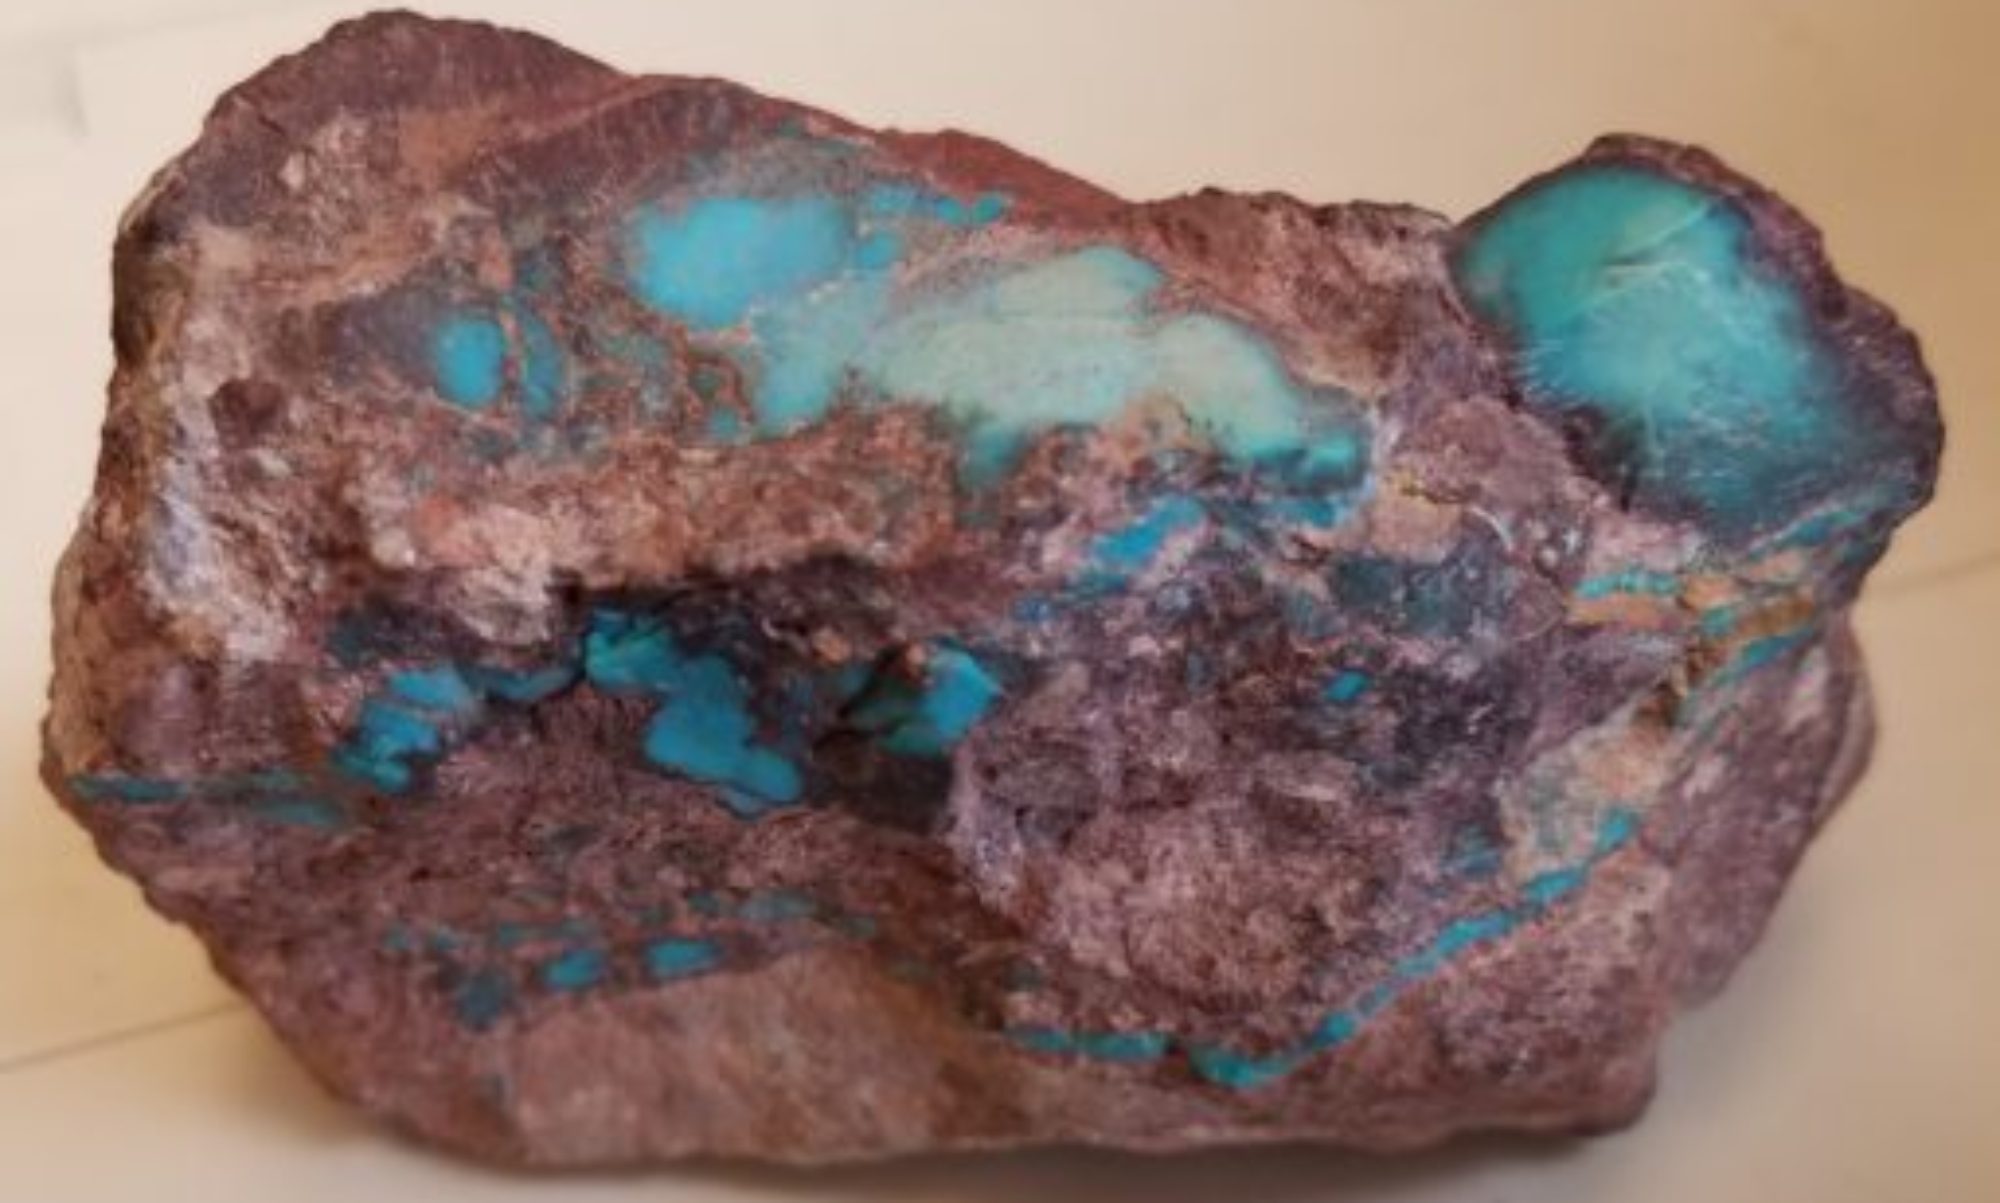 Bisbee Turquoise in Host Rock